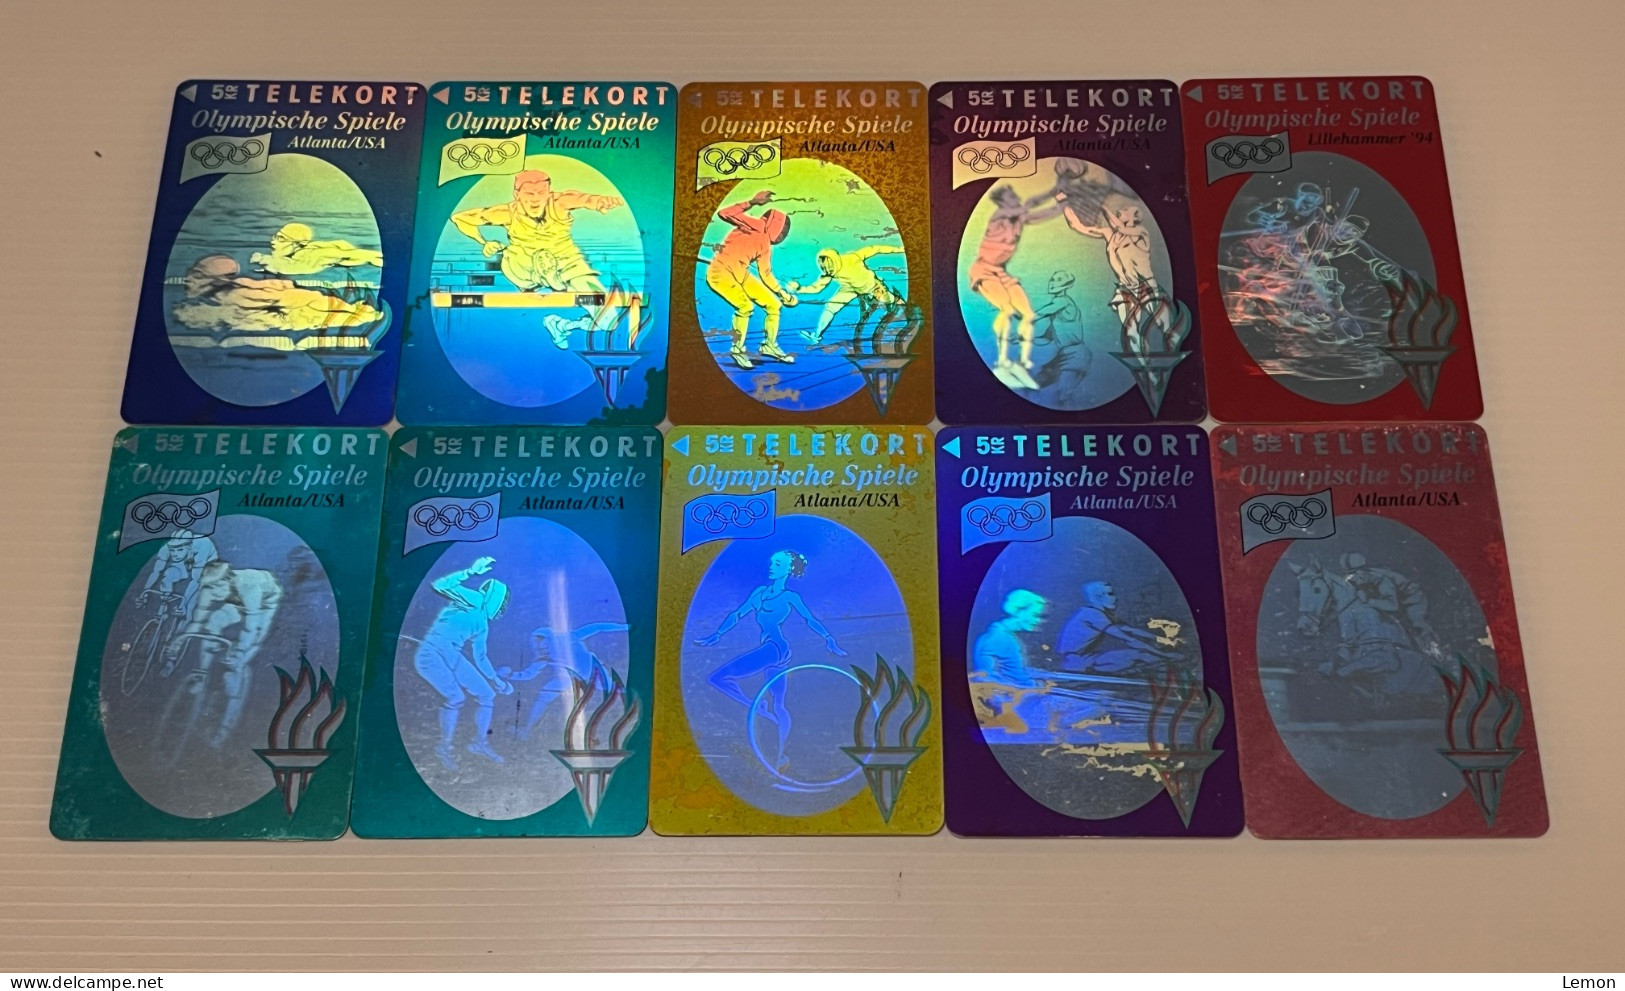 Mint Denmark / Danmark Phonecard, Hologram Atlanta Olympic USA - Olympische Spiele, Set Of 10 Mint Cards - Denmark